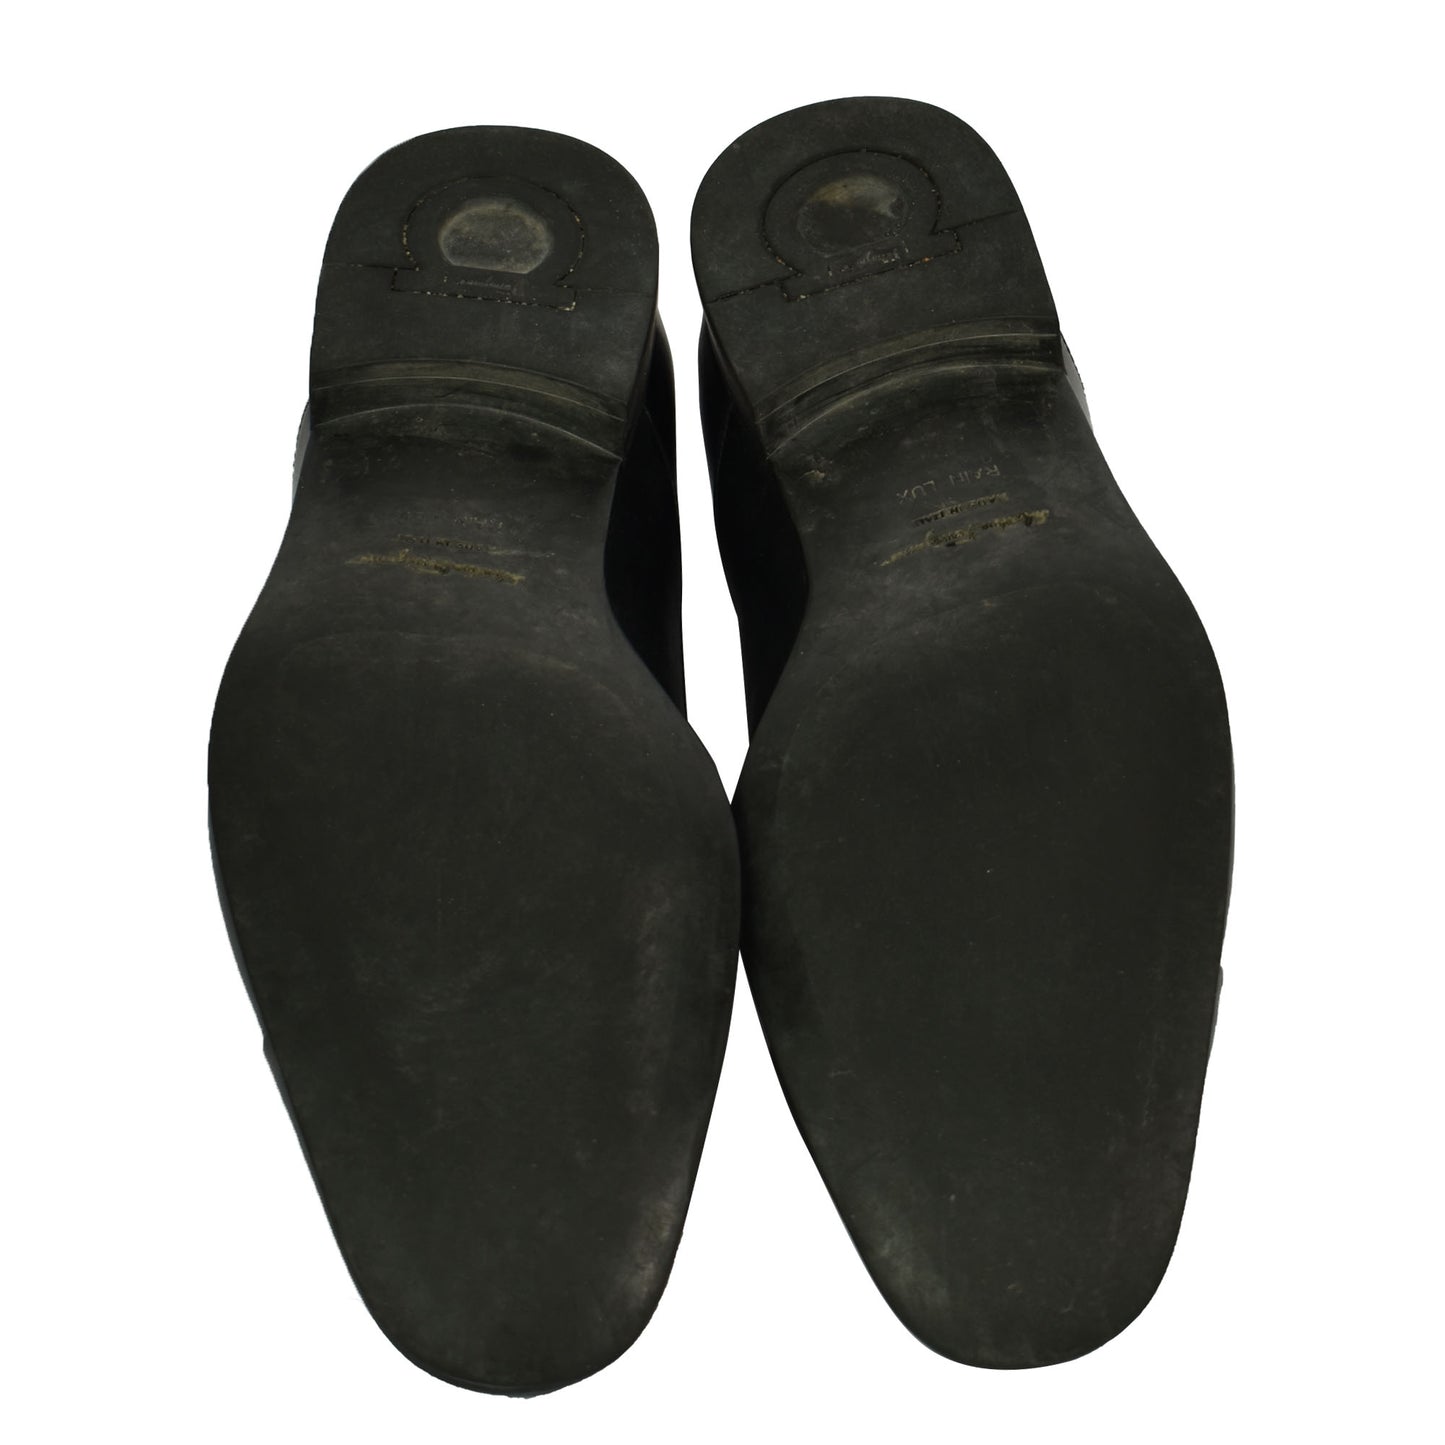 Salvatore Ferragamo Men Captoe Shoes - Size 7 - Made in Italy